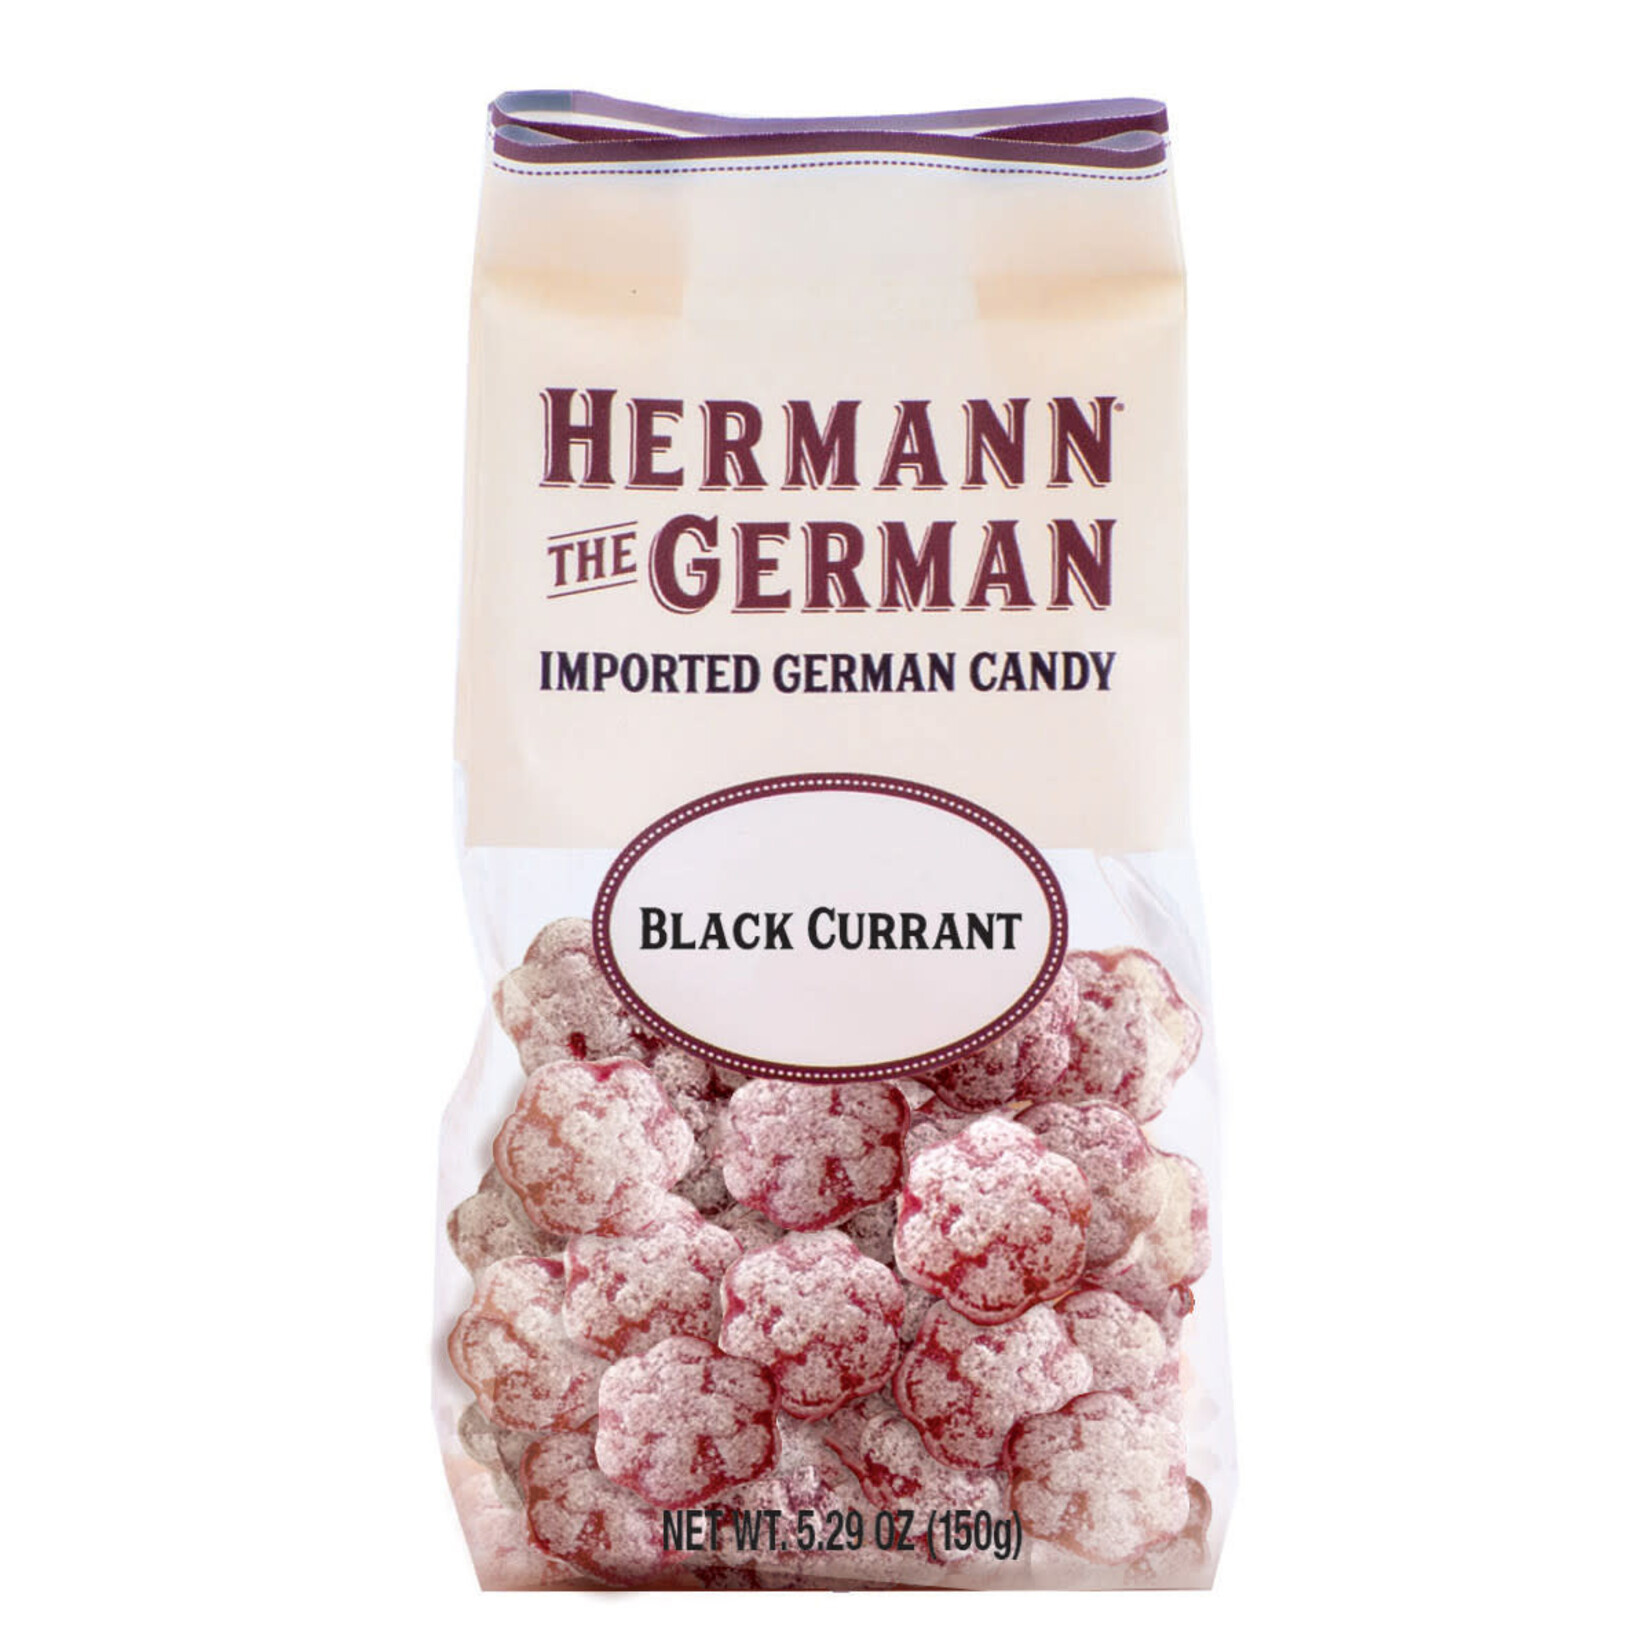 Hermann the German Hermann the German Black Currant Candy